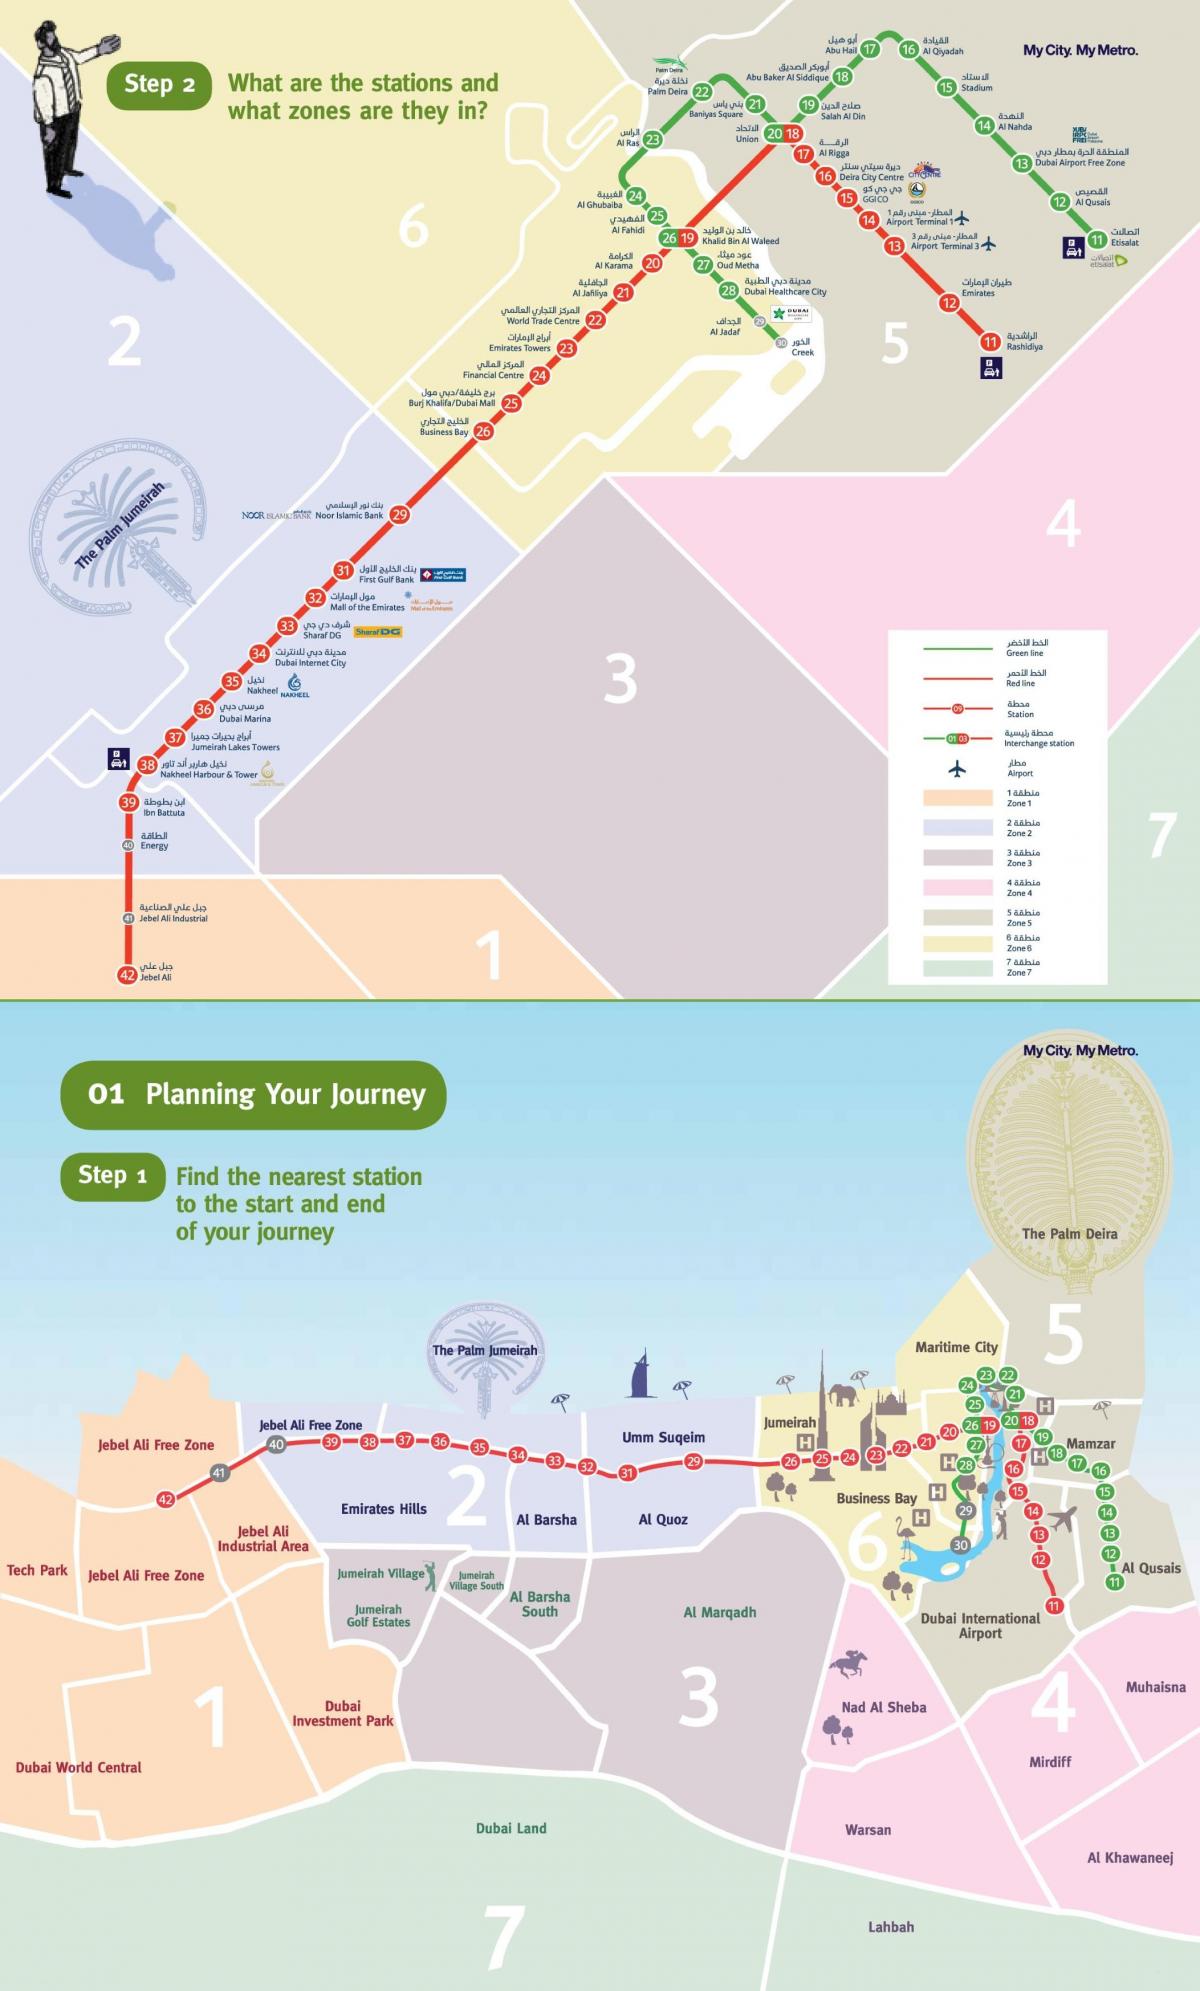 Дубай monorail замын газрын зураг нь